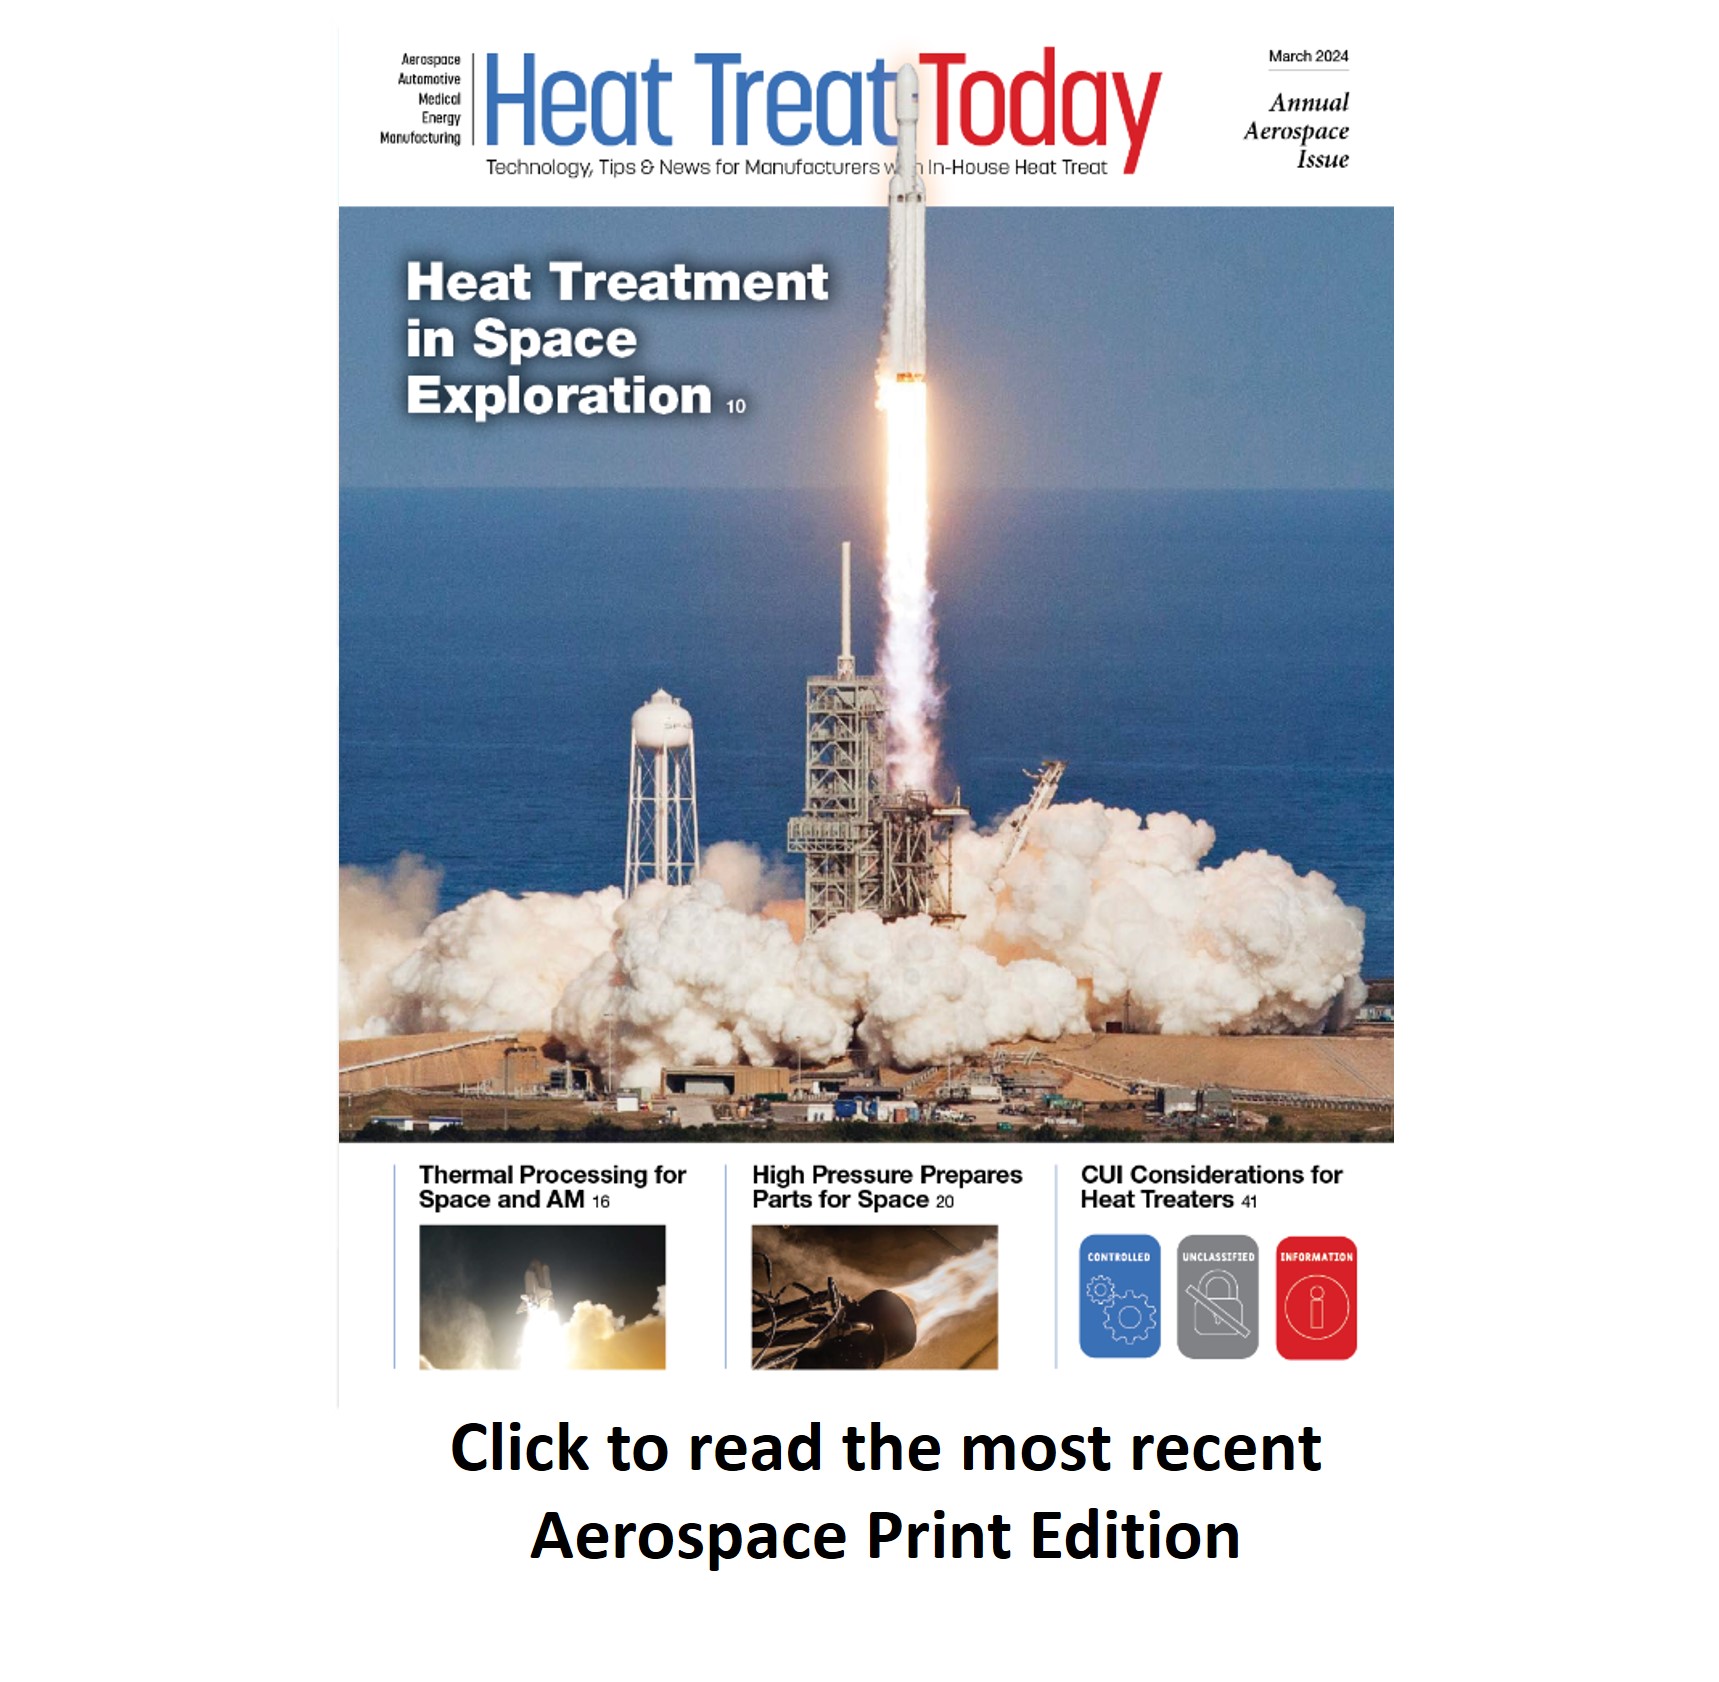 Aerospace print edition ad